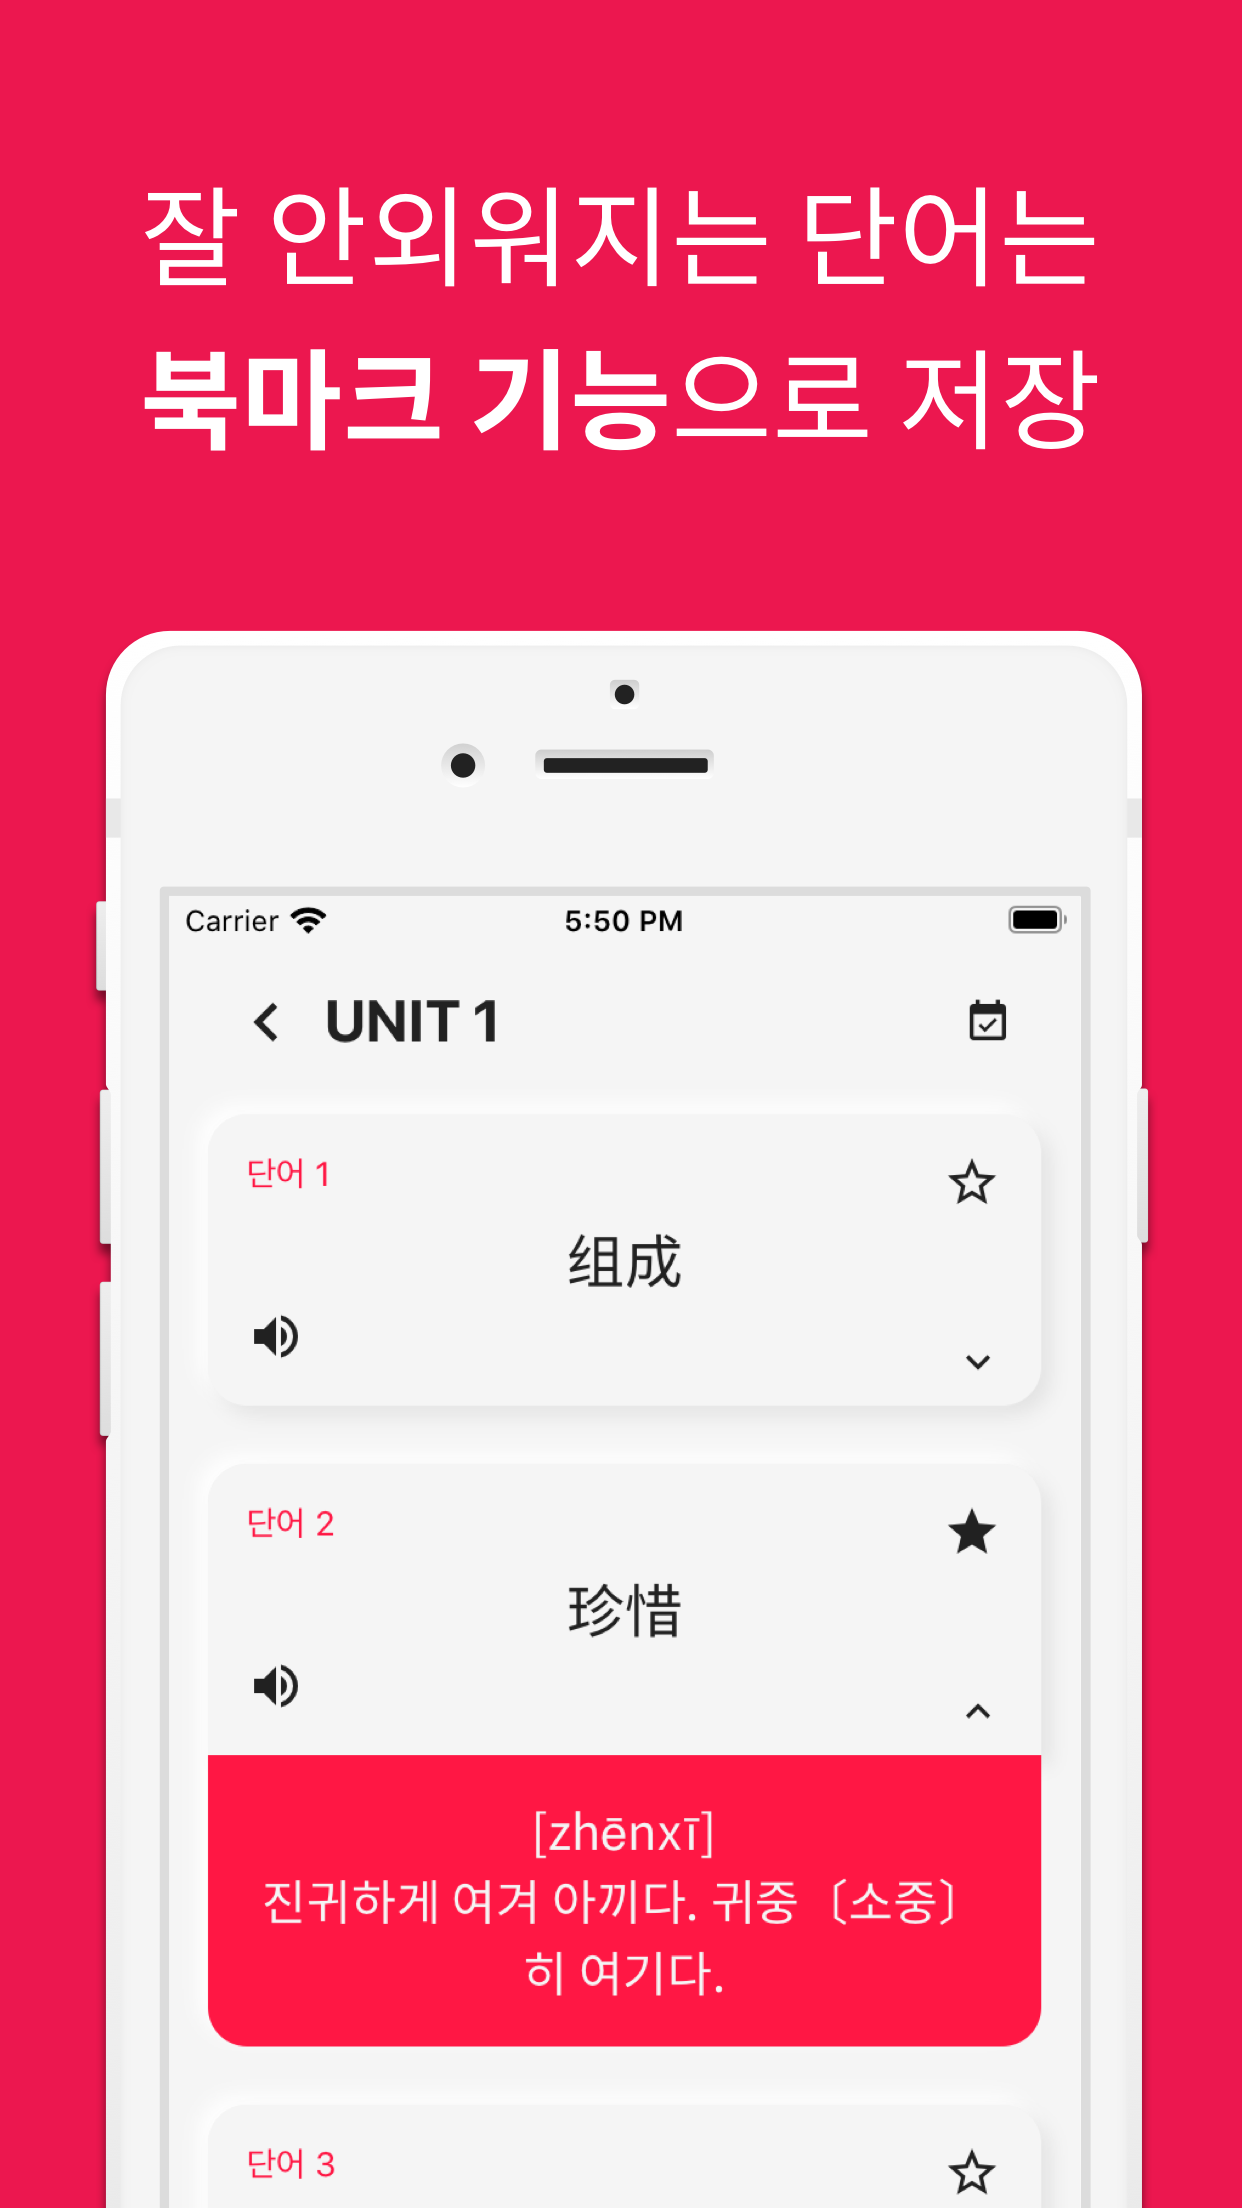 HSK 중국어 단어앱 - 앱 스크린 샷5